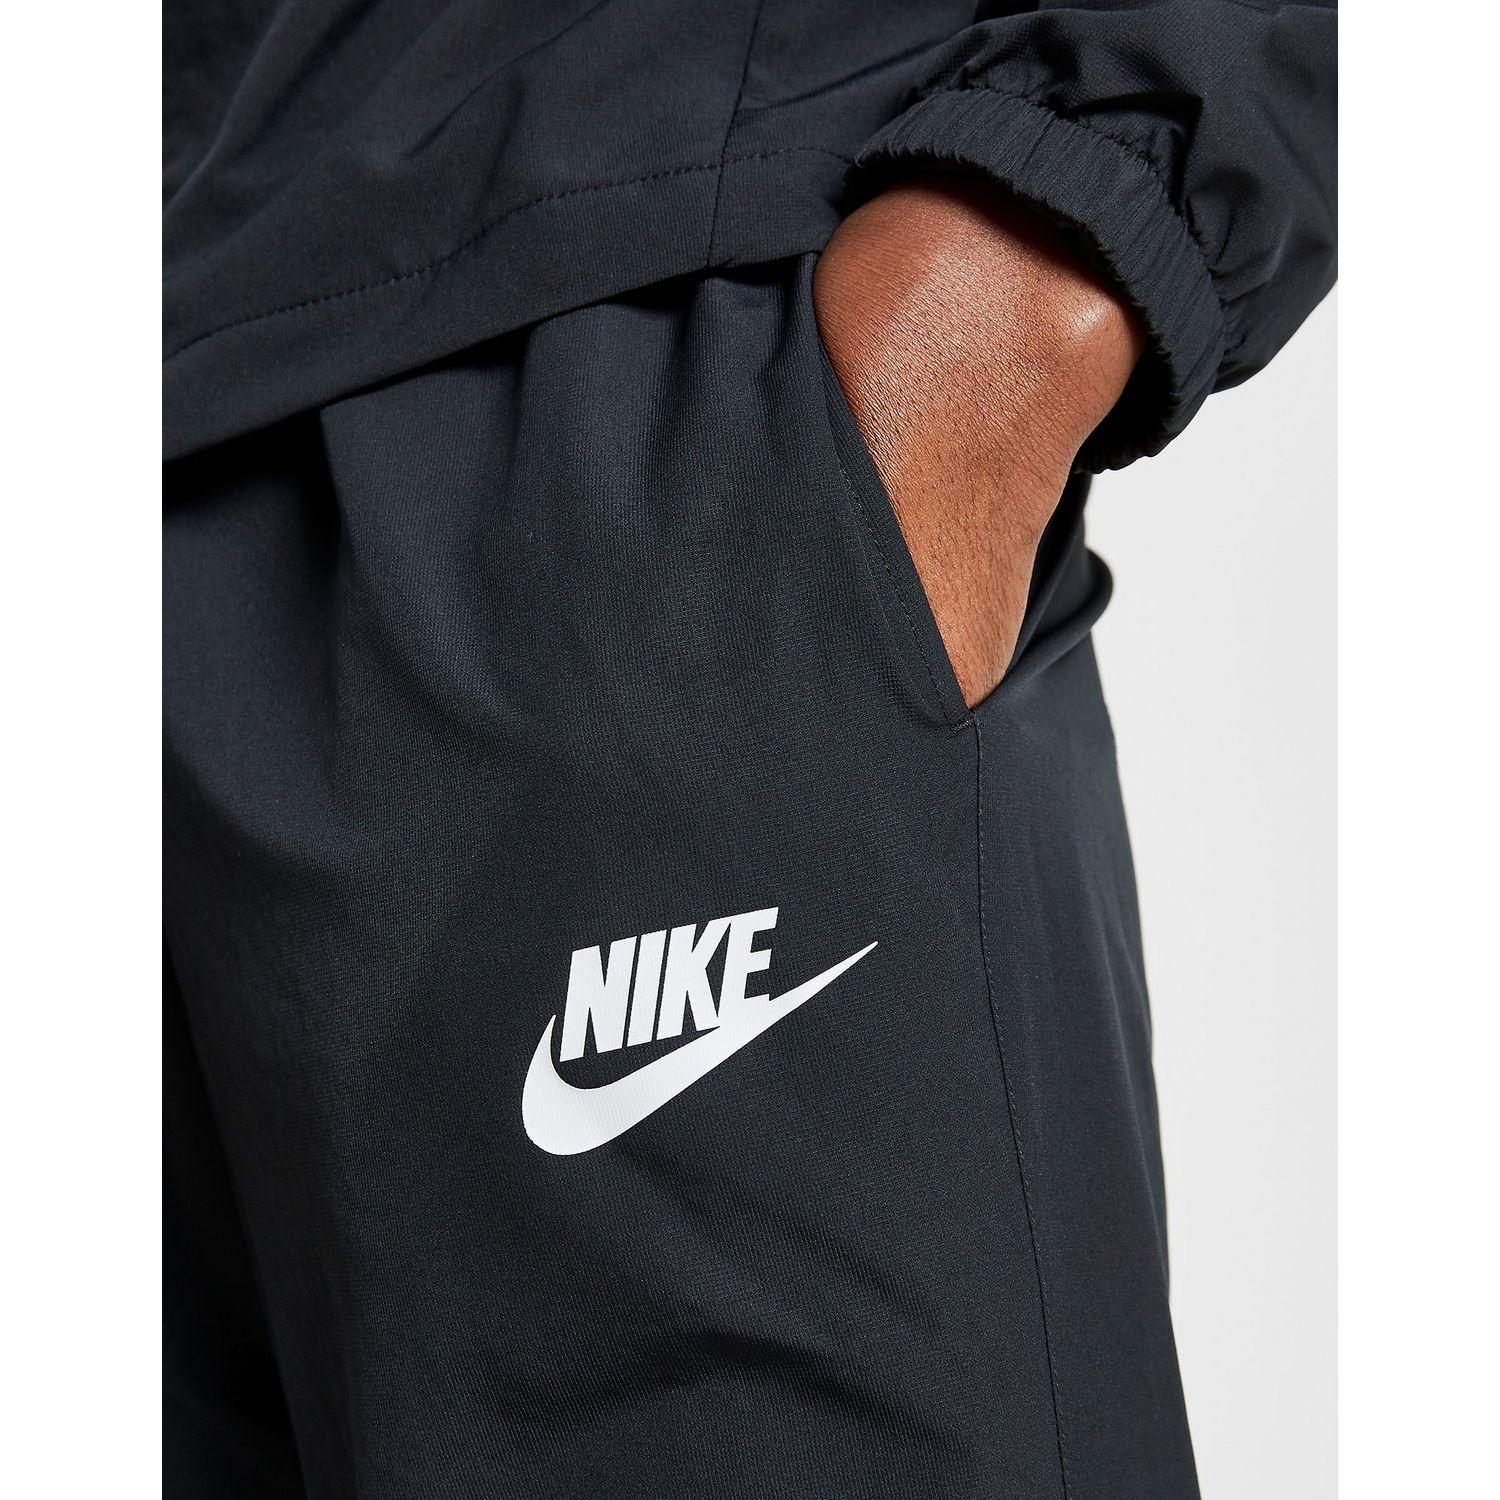 Nike Season 2 Woven Tracksuit in Black for Men - Lyst